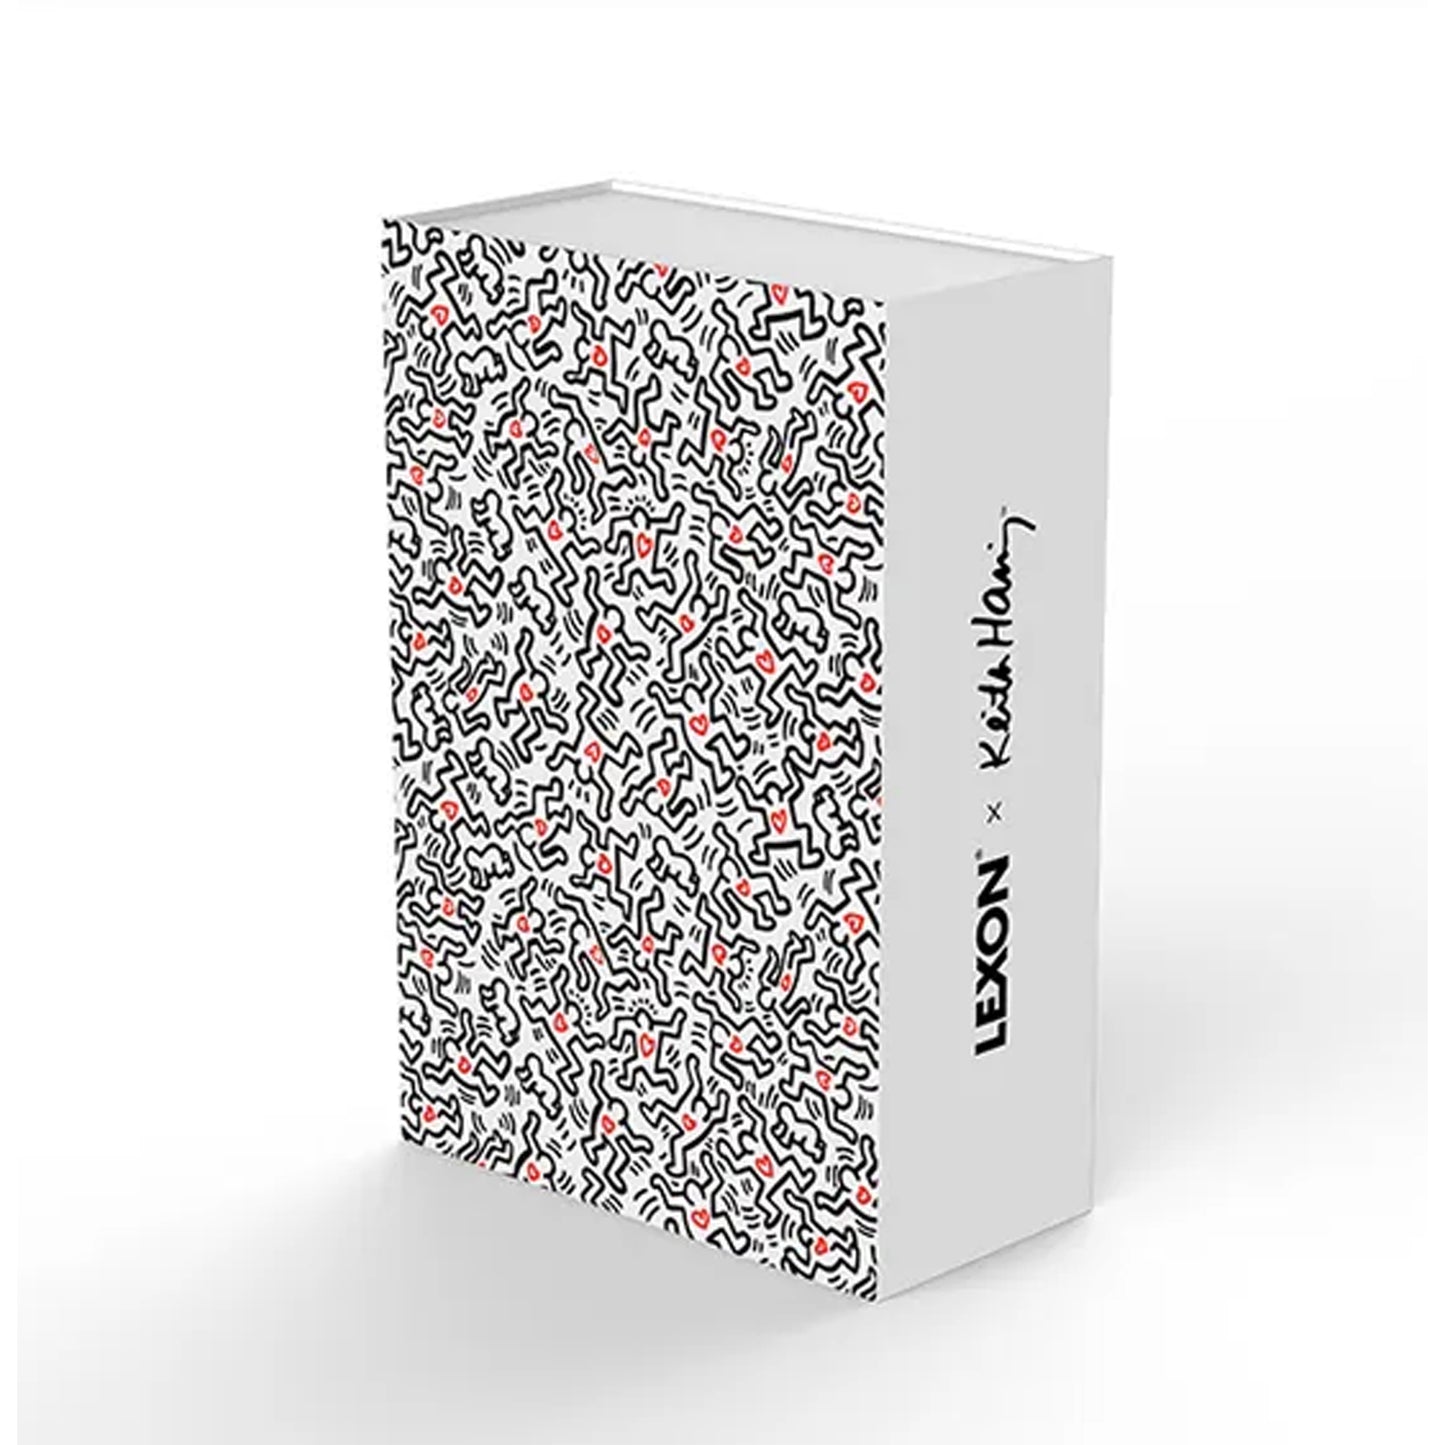 Gift set - Lexon x Keith Haring